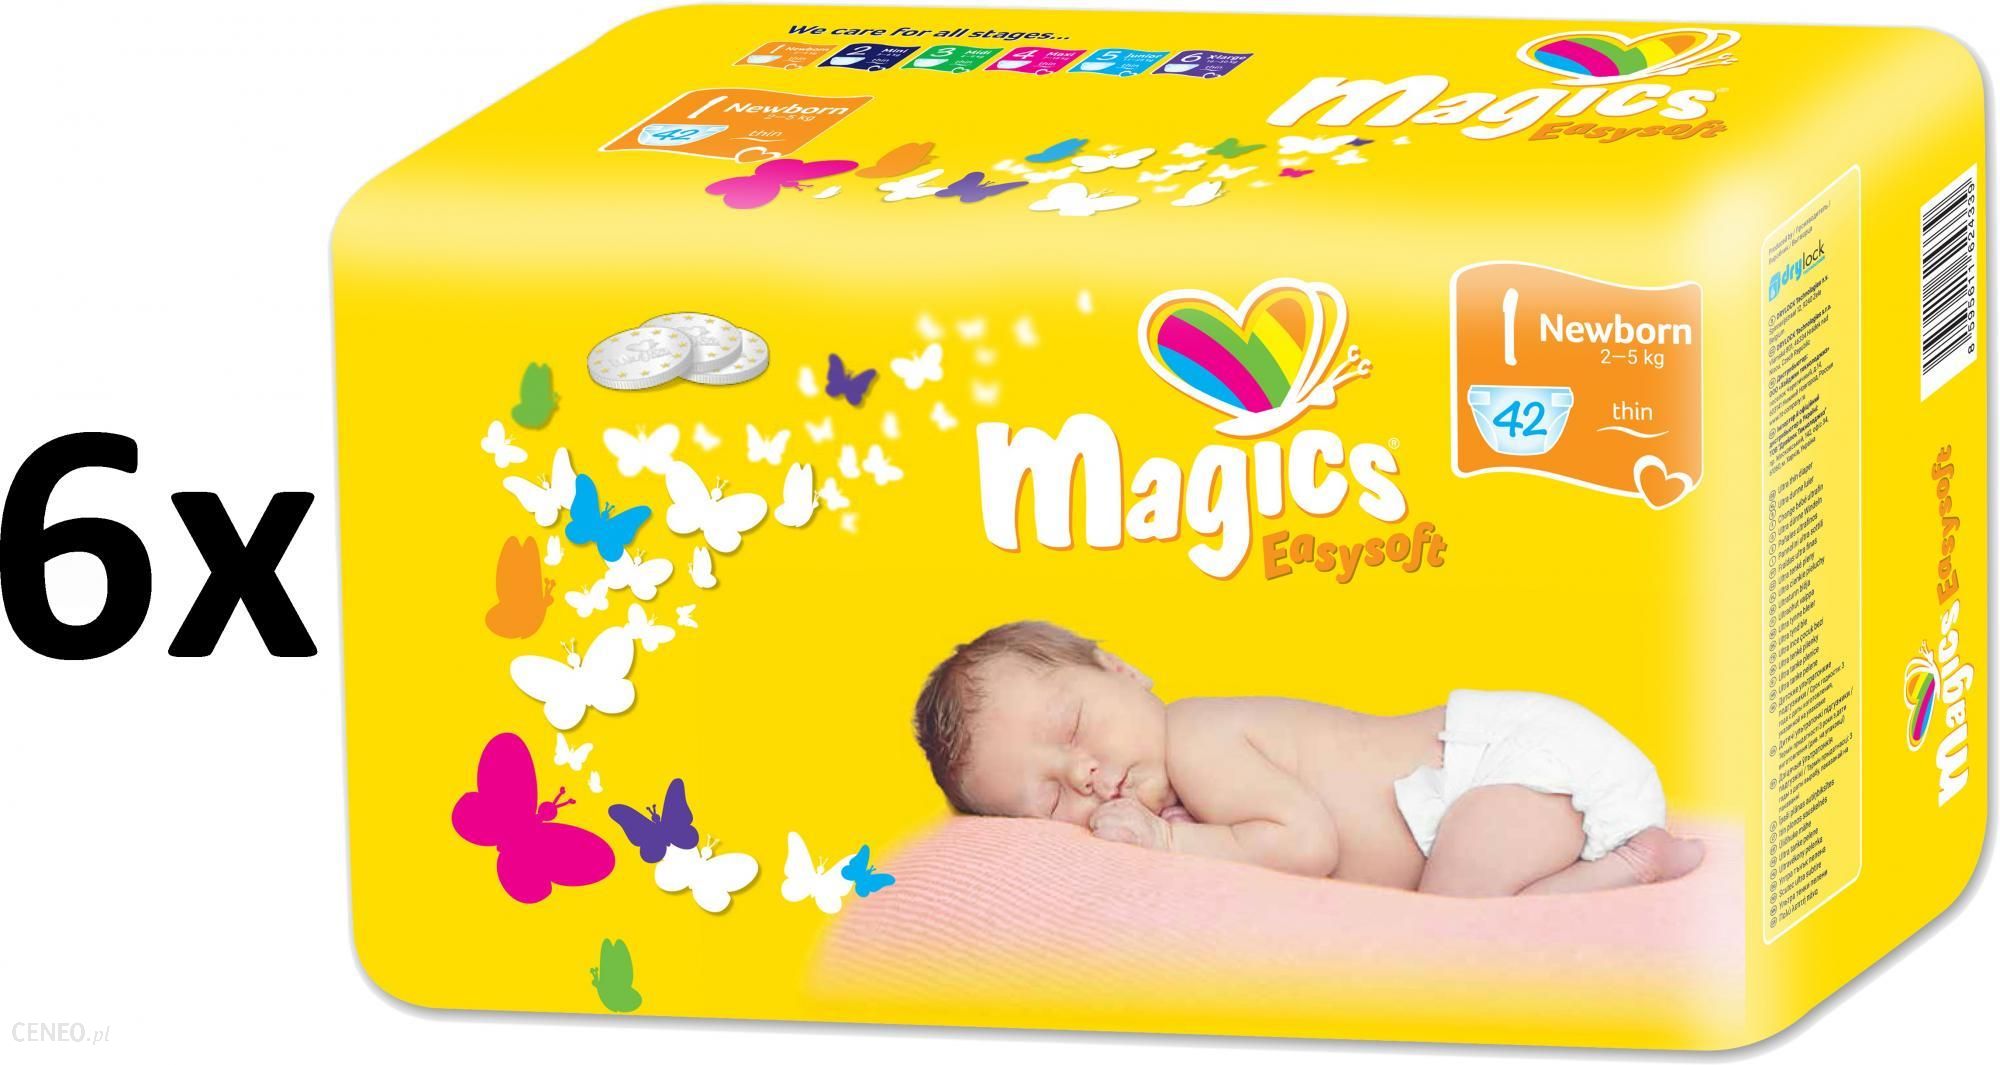 New born 2. Подгузники Magics Easysoft Maxi 48. Подгузники детские Magics Easysoft Maxi, 48шт. Подгузники детские Magics Easysoft Maxi 4. Подгузники Magics Easysoft 6.